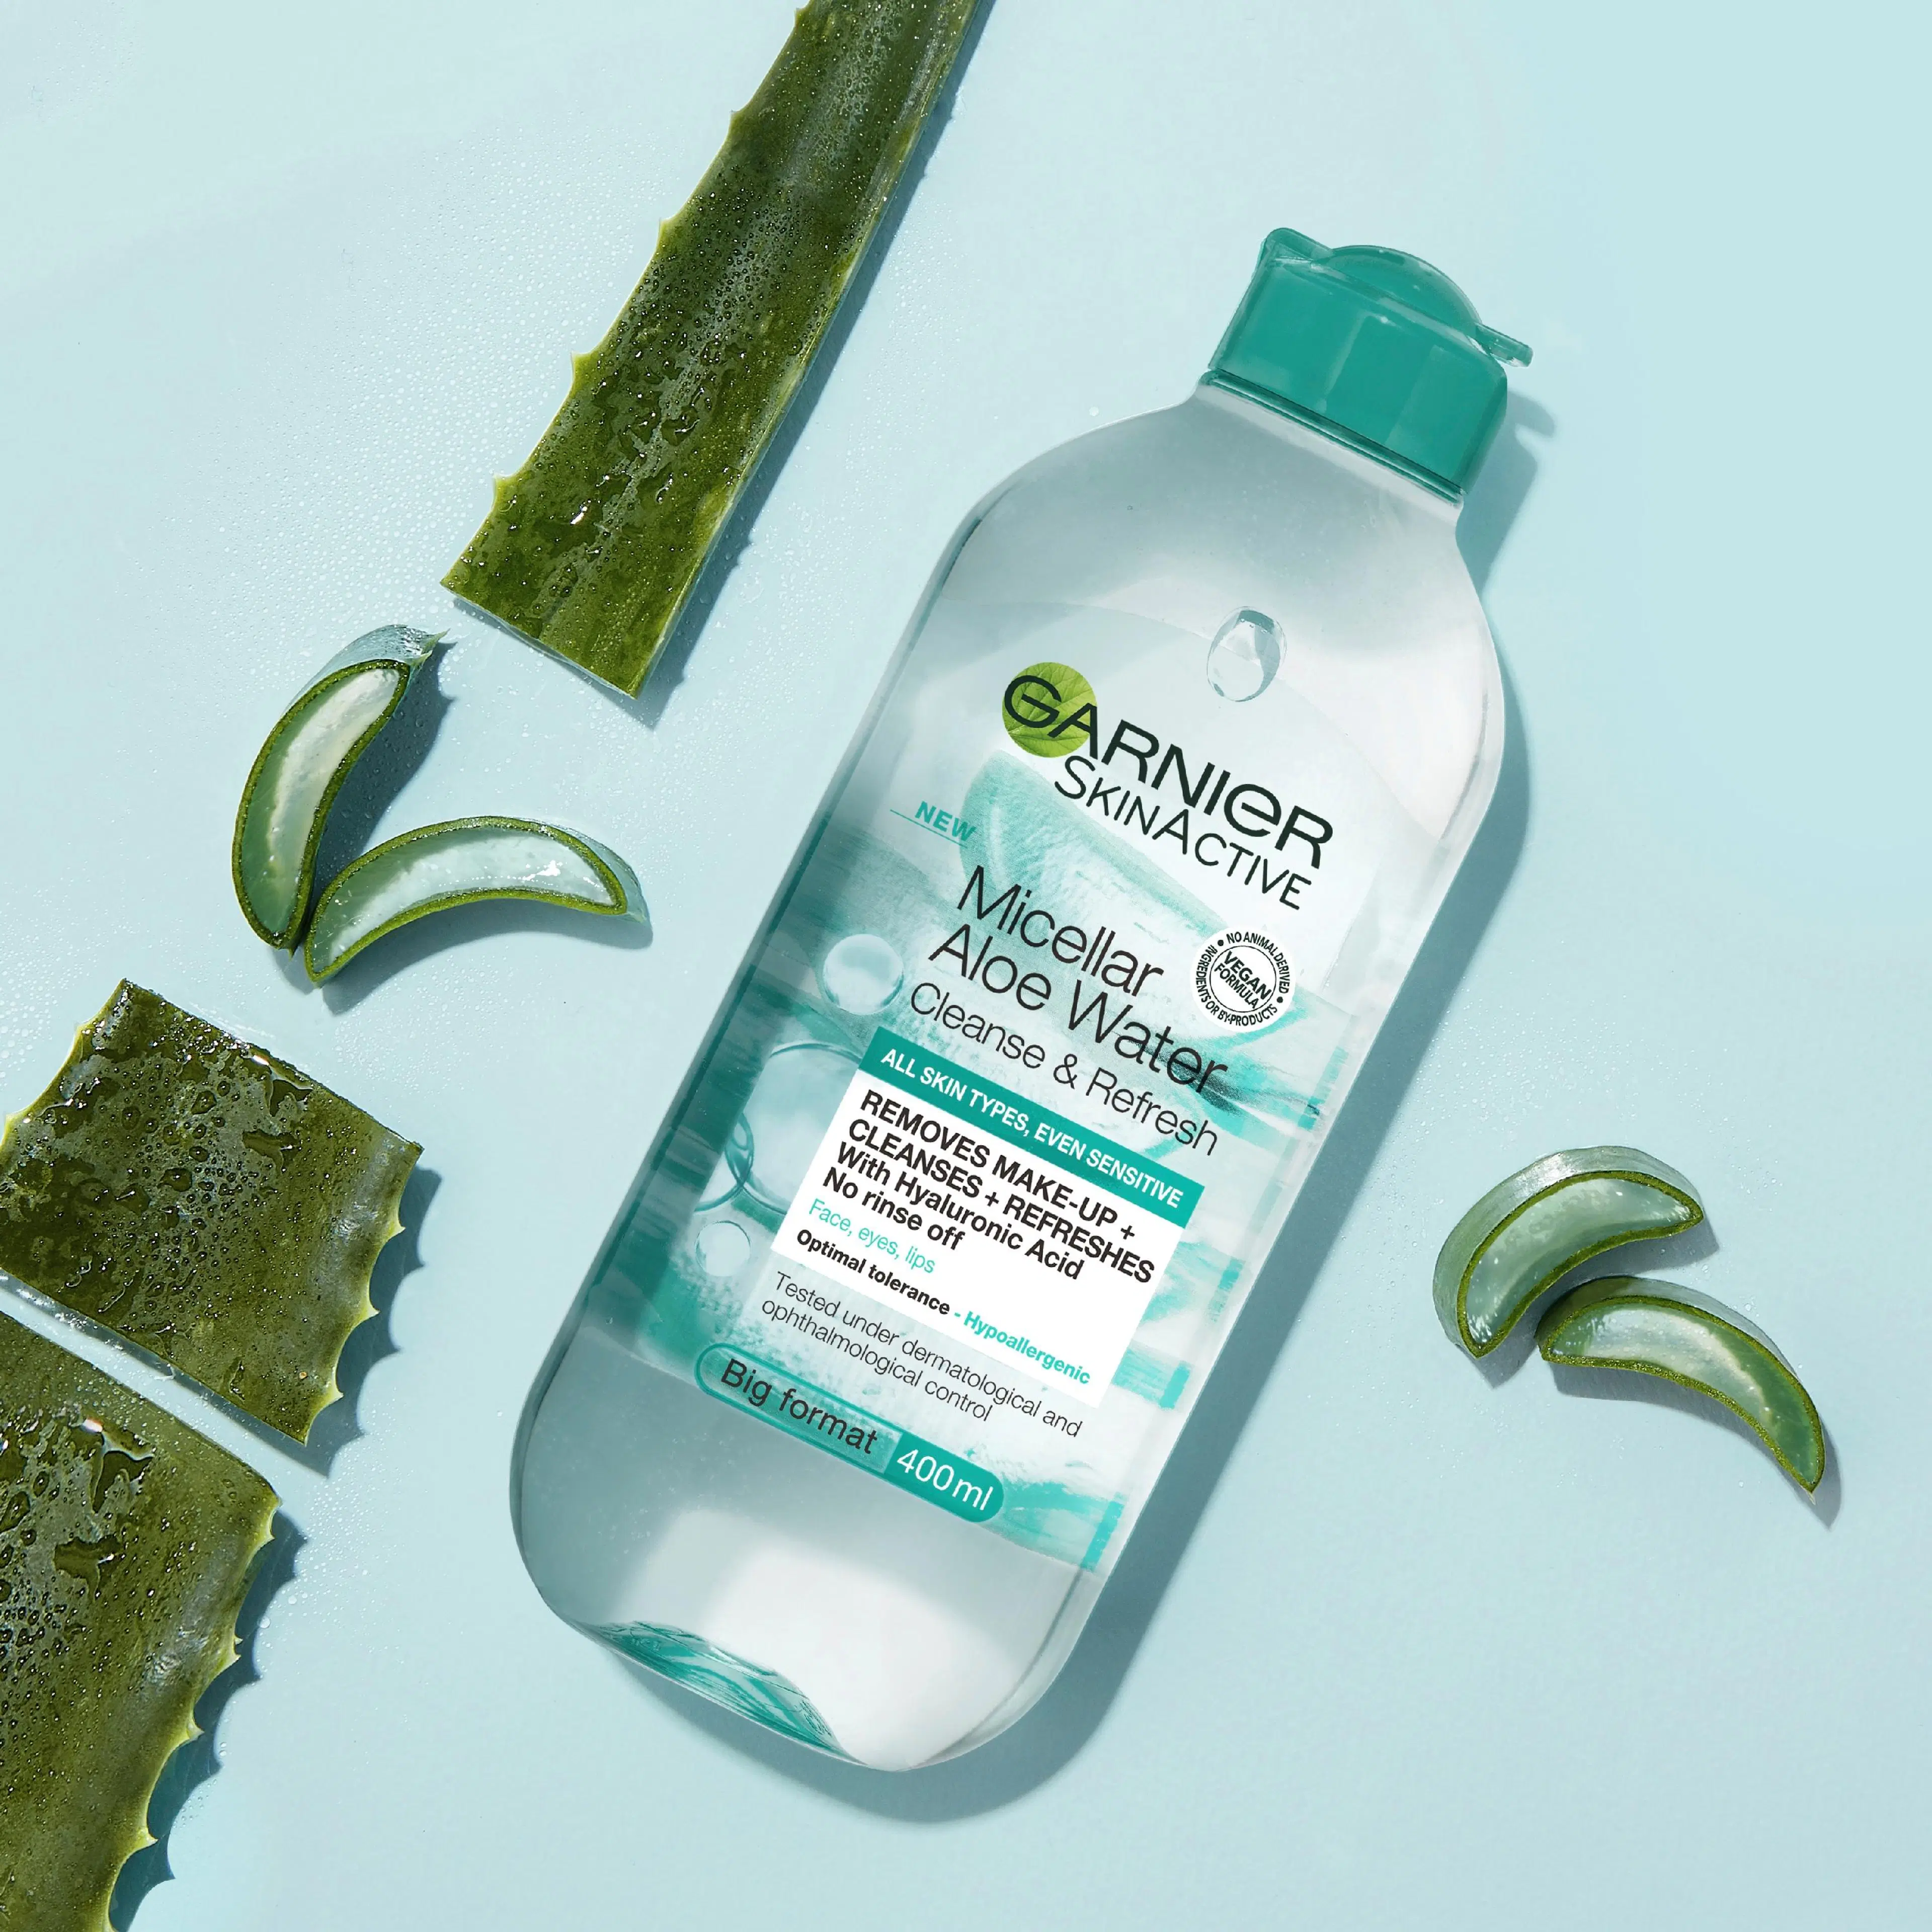 Garnier SkinActive Micellar Aloe Water Cleanse & Refresh puhdistusvesi 400ml